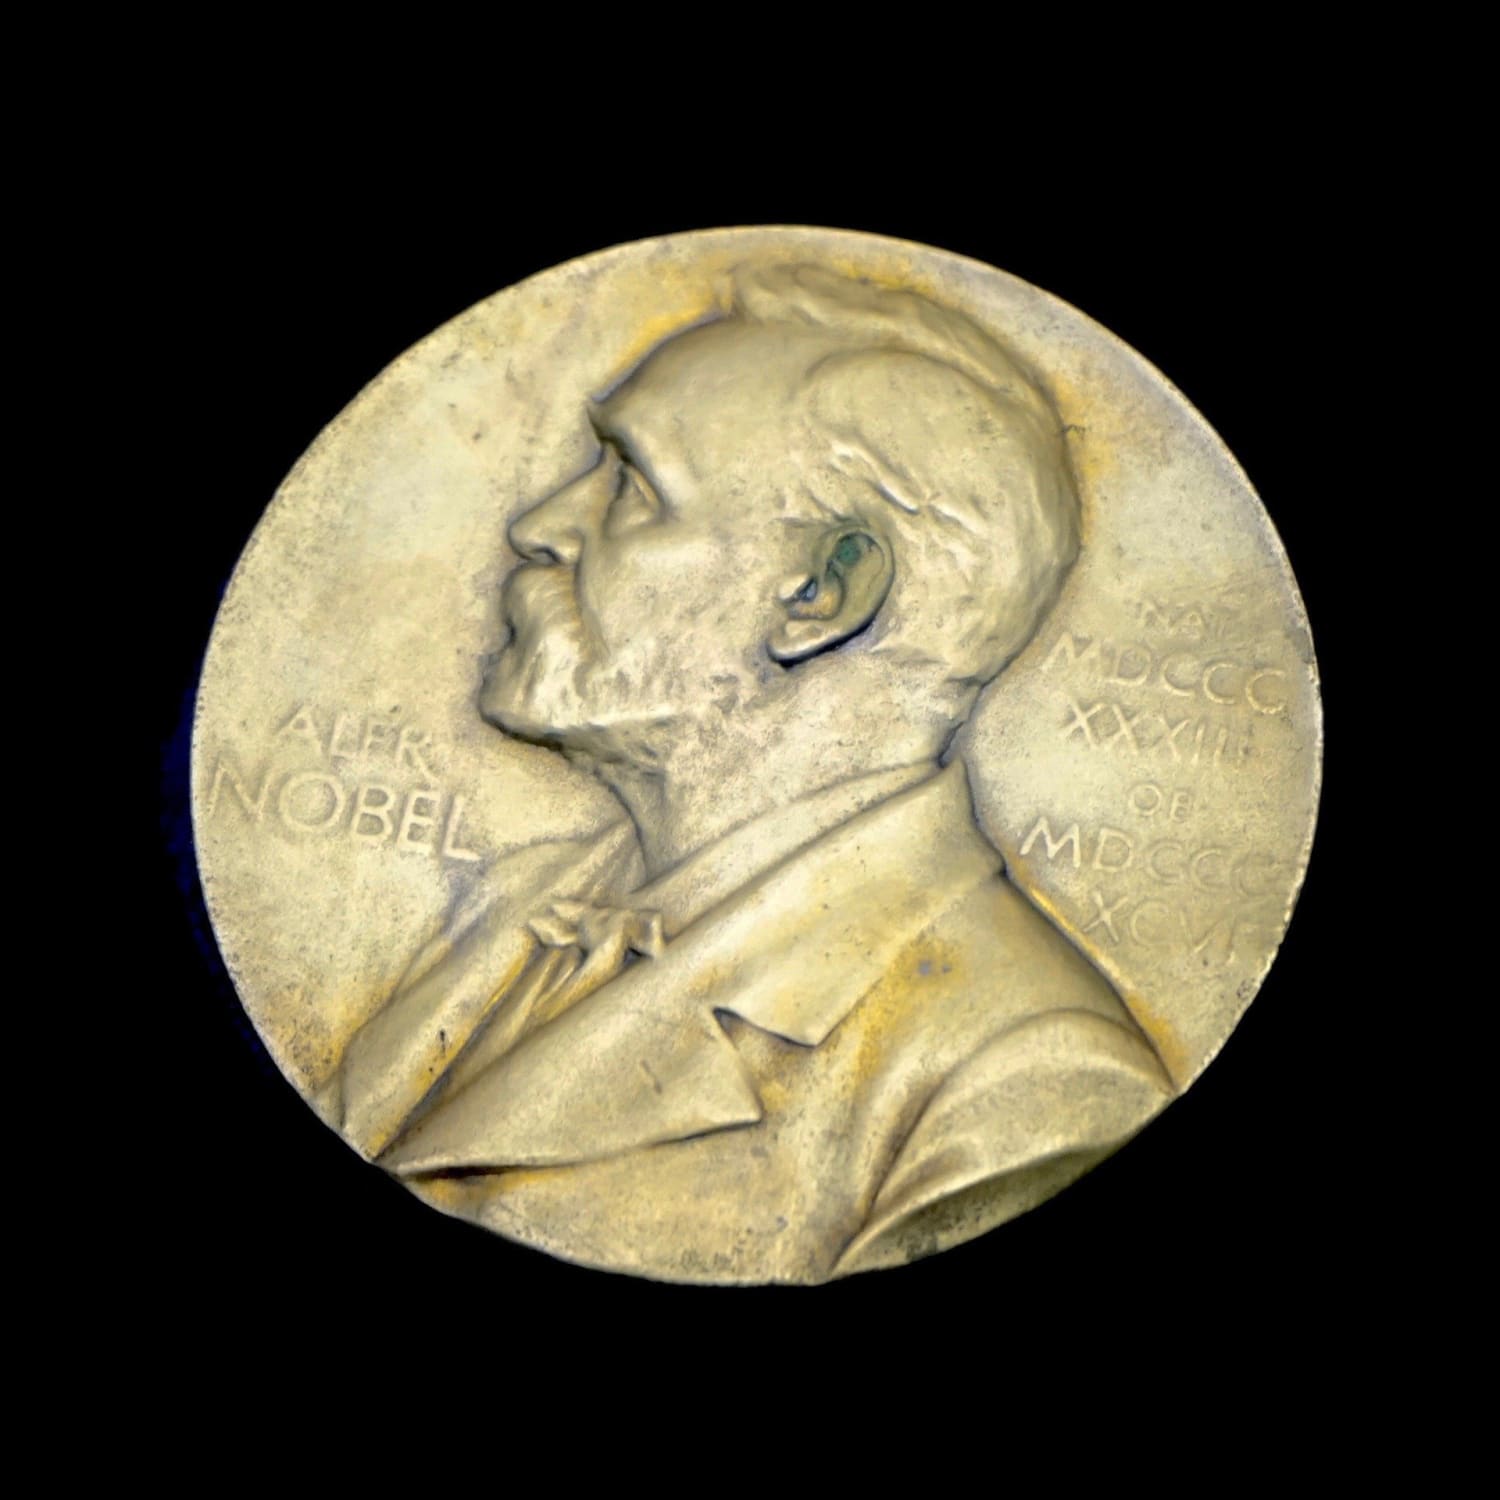 Nobel prizewinners have different career patterns than peers